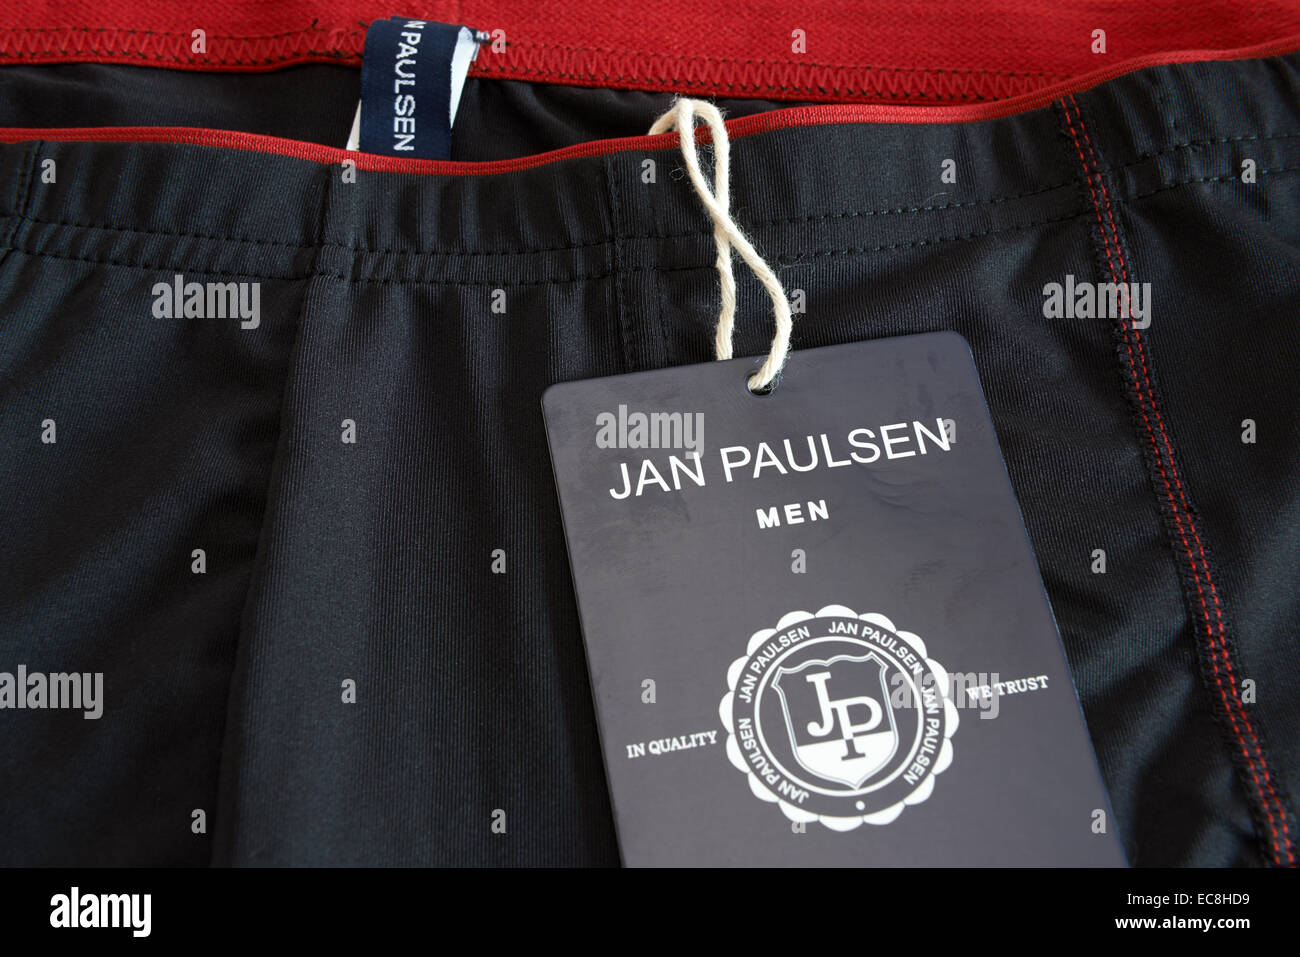 Jan Paulsen Herren Unterhose Stockfotografie - Alamy